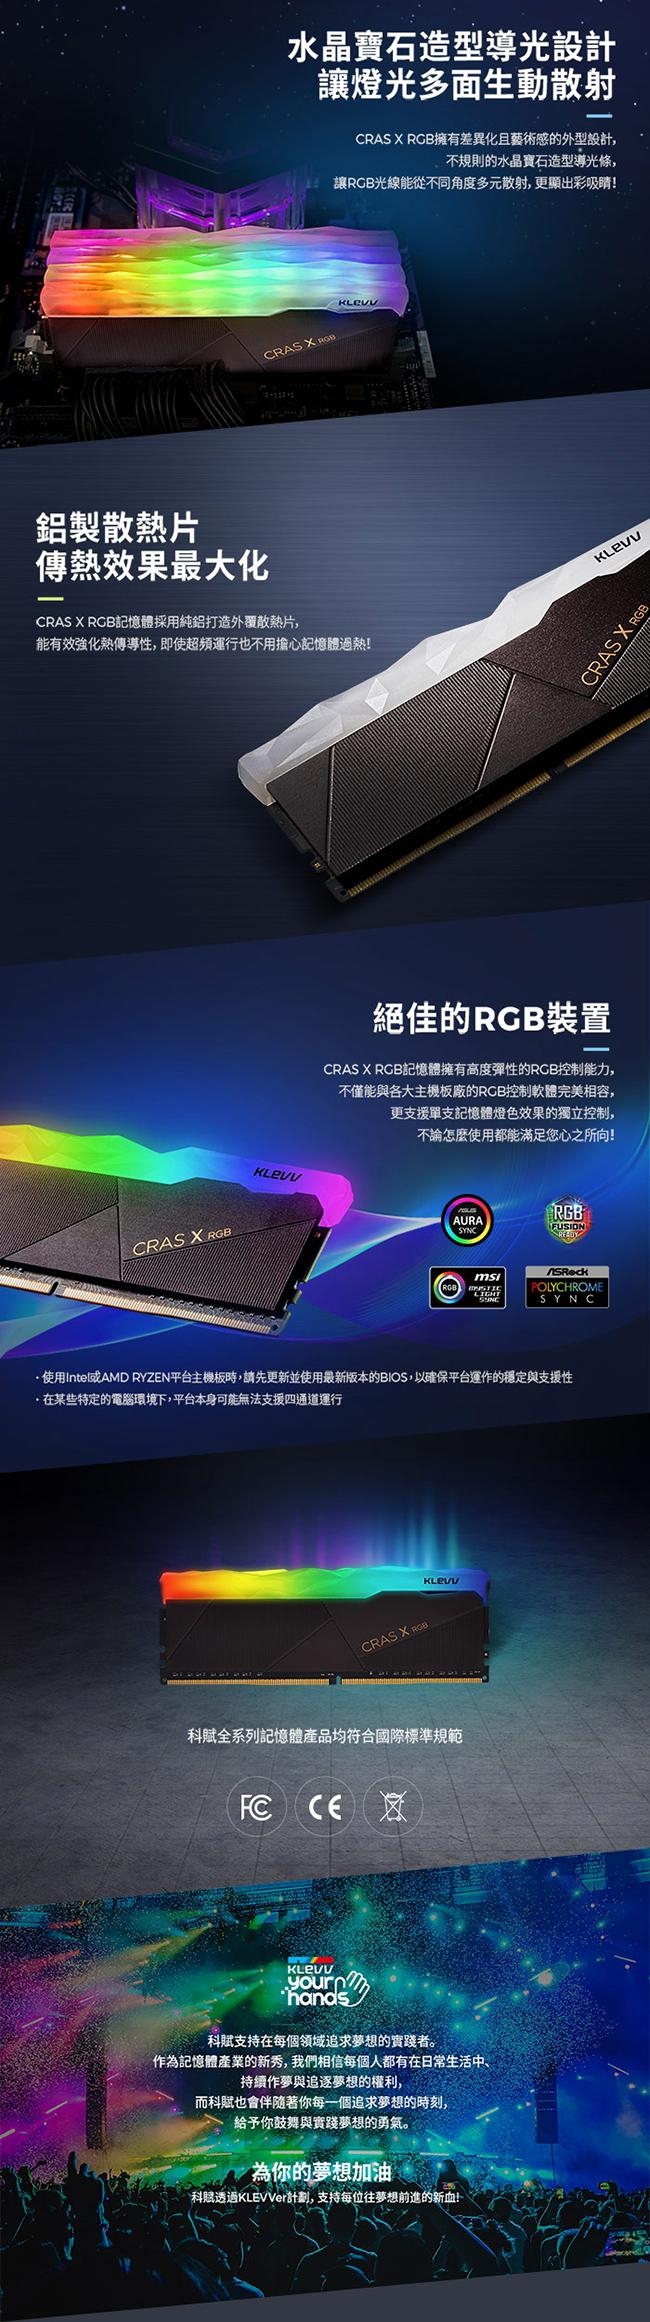 KLEVV科賦 CRAS X RGB DDR4 3200 16Gx2 桌上型電競超頻記憶體